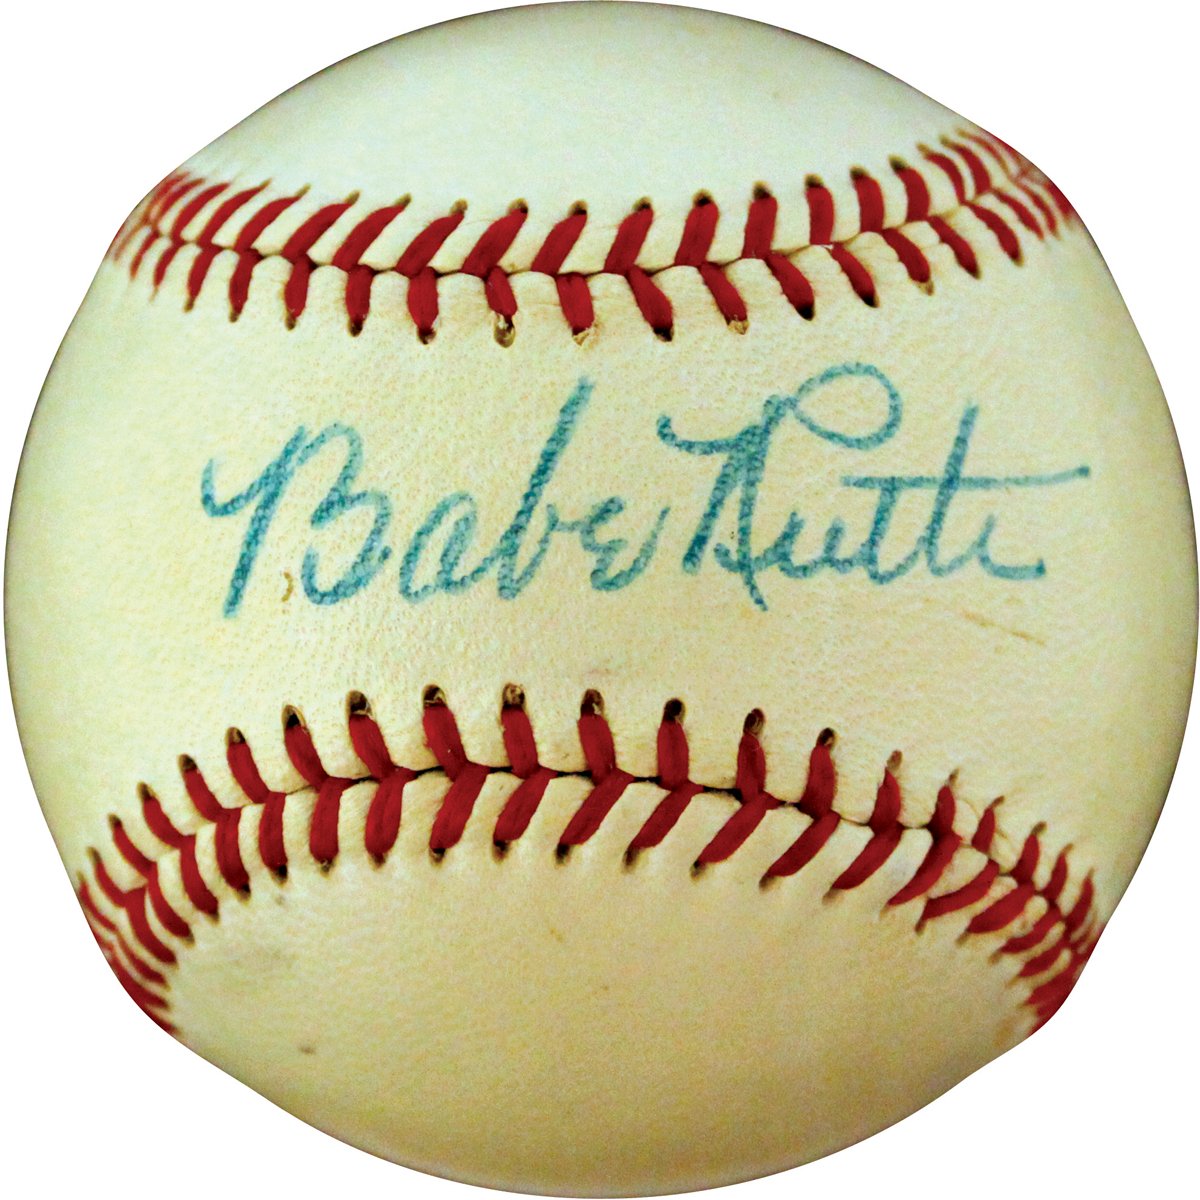 3 High Grade Babe Ruth Signed Baseballs Offered